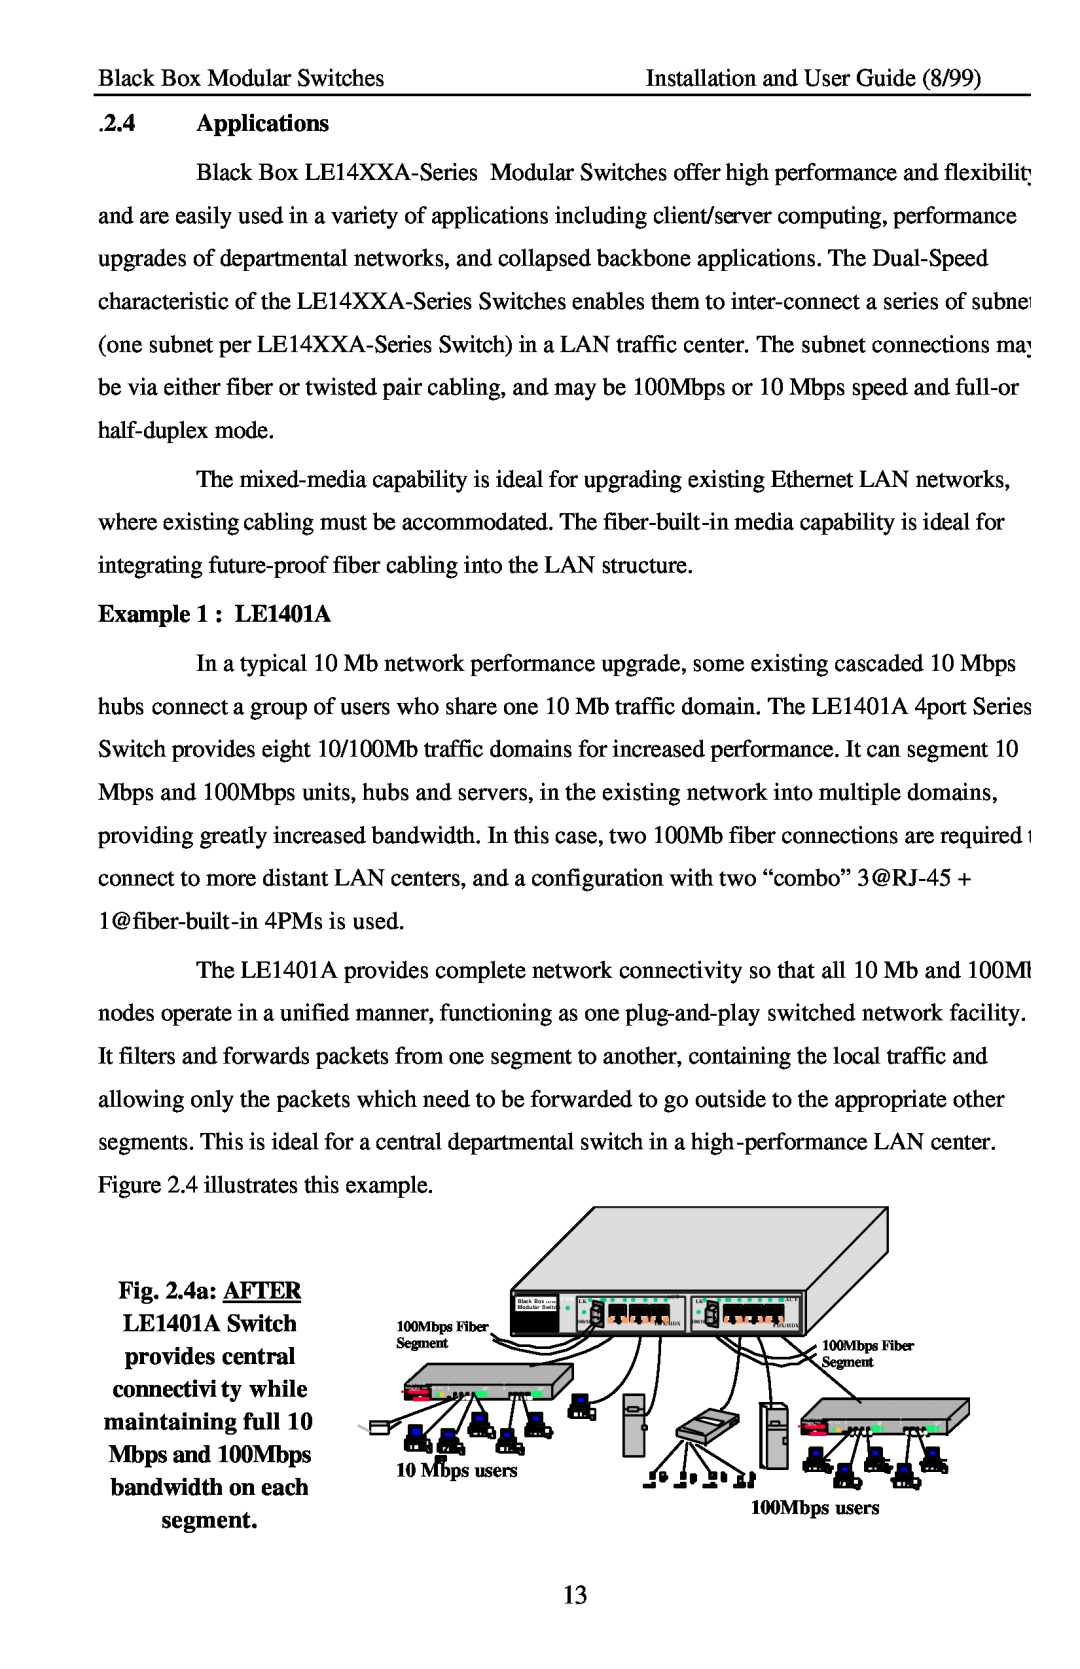 Black Box LE14XXA, Modular Switches manual Applications, Example 1 LE1401A 